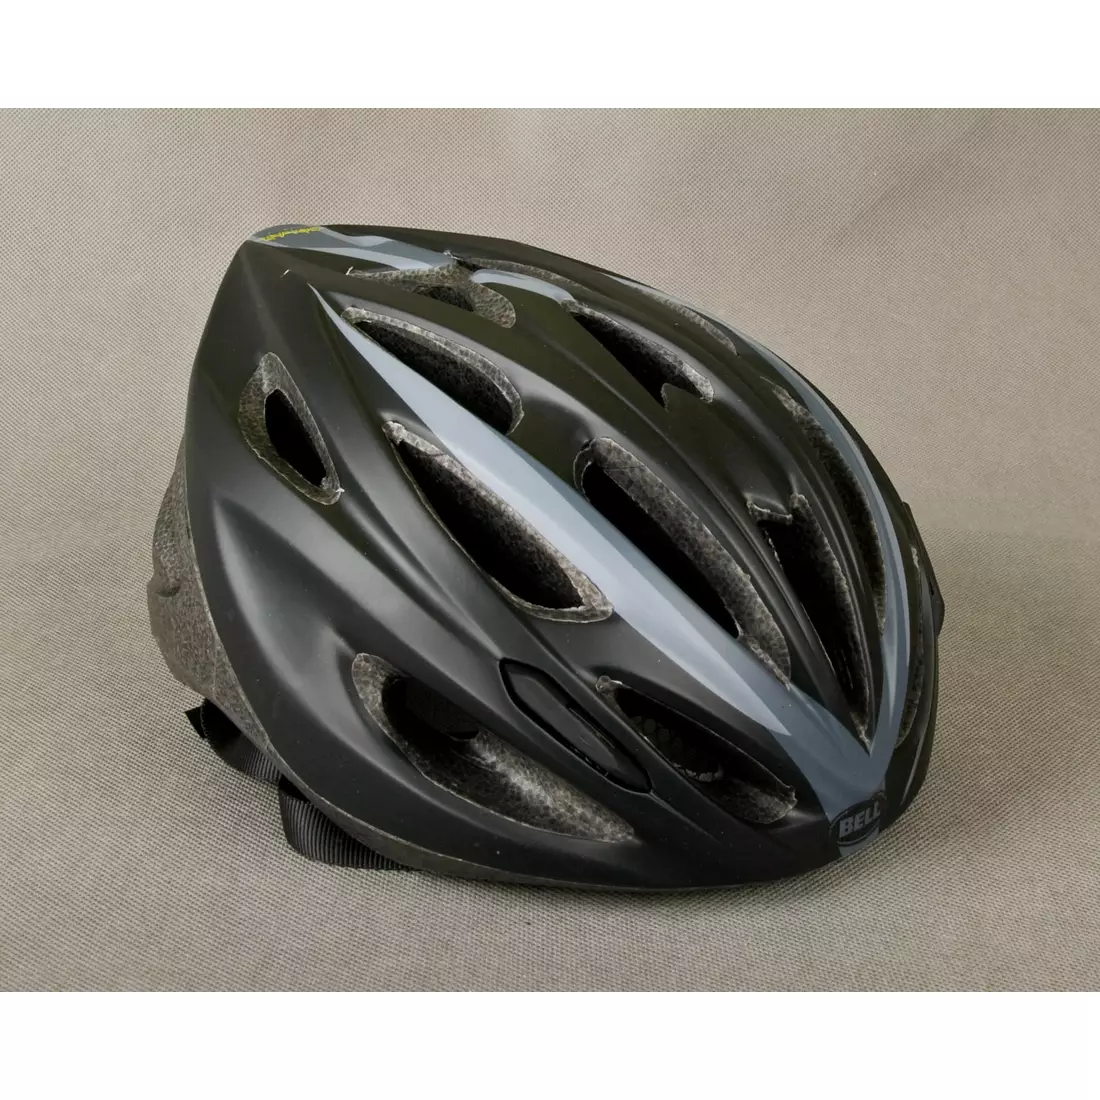 BELL bicycle helmet SOLAR black titanium